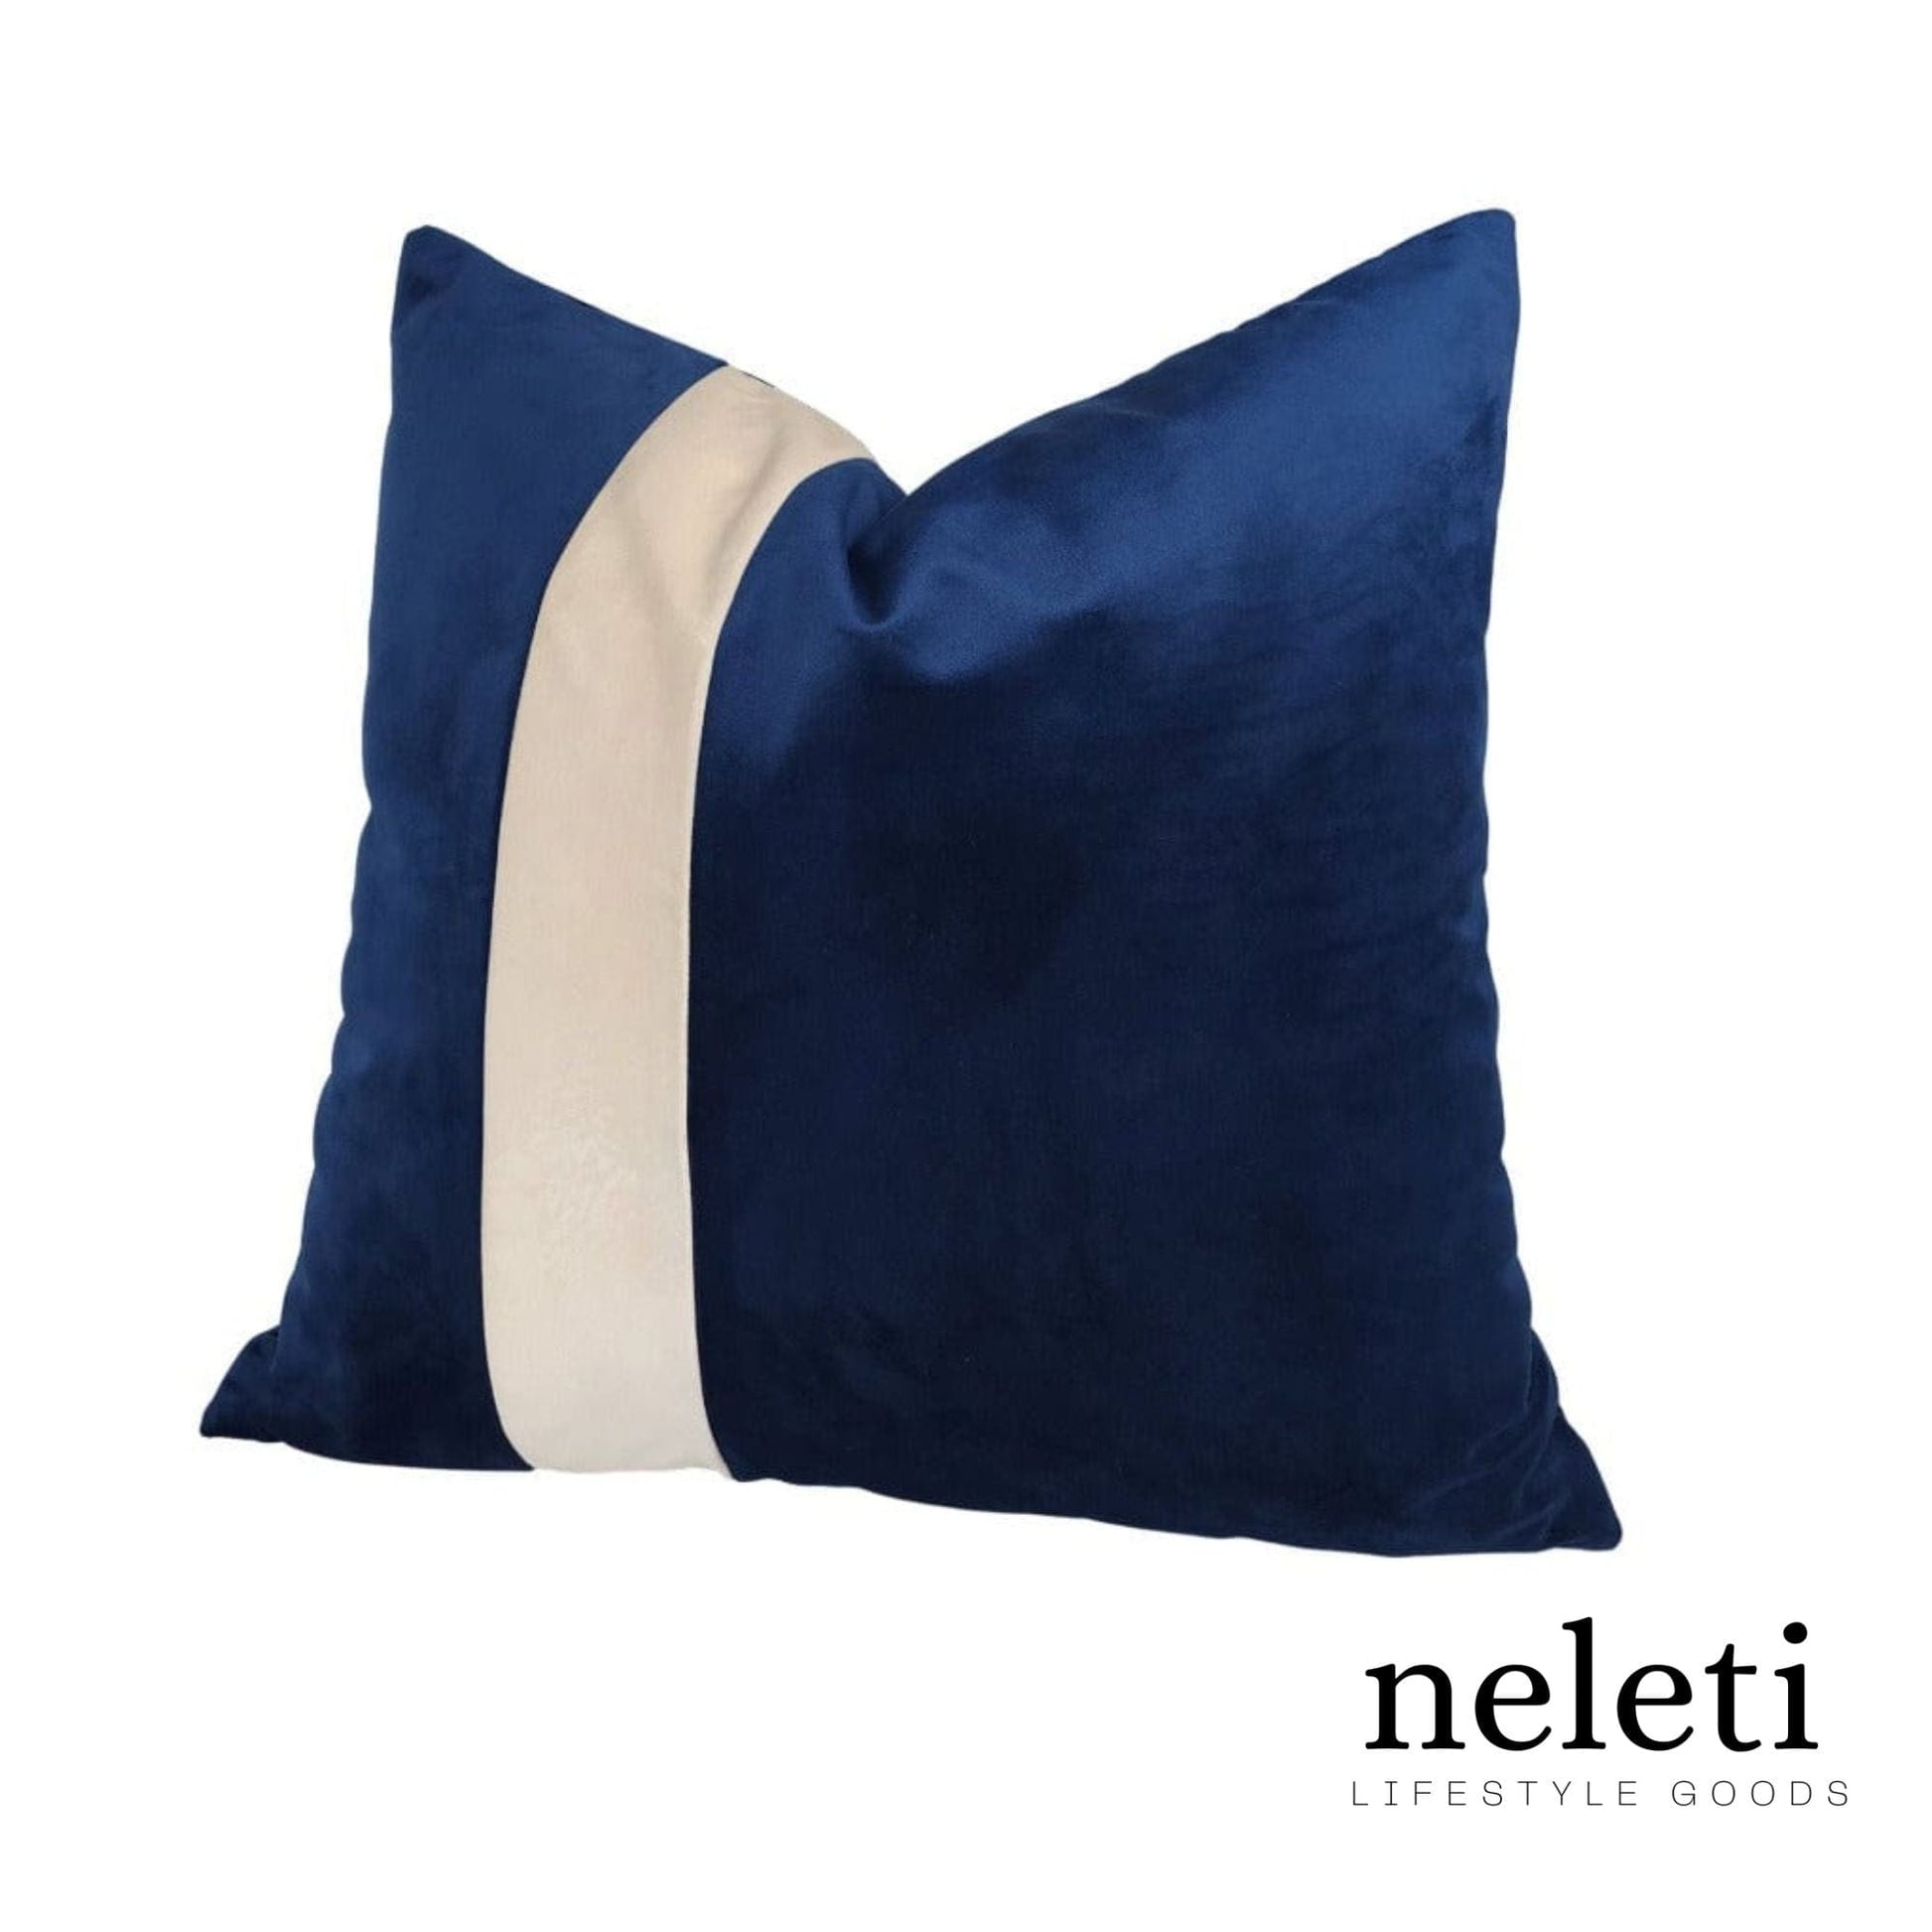 neleti.com-blue-accent-pillow-cover